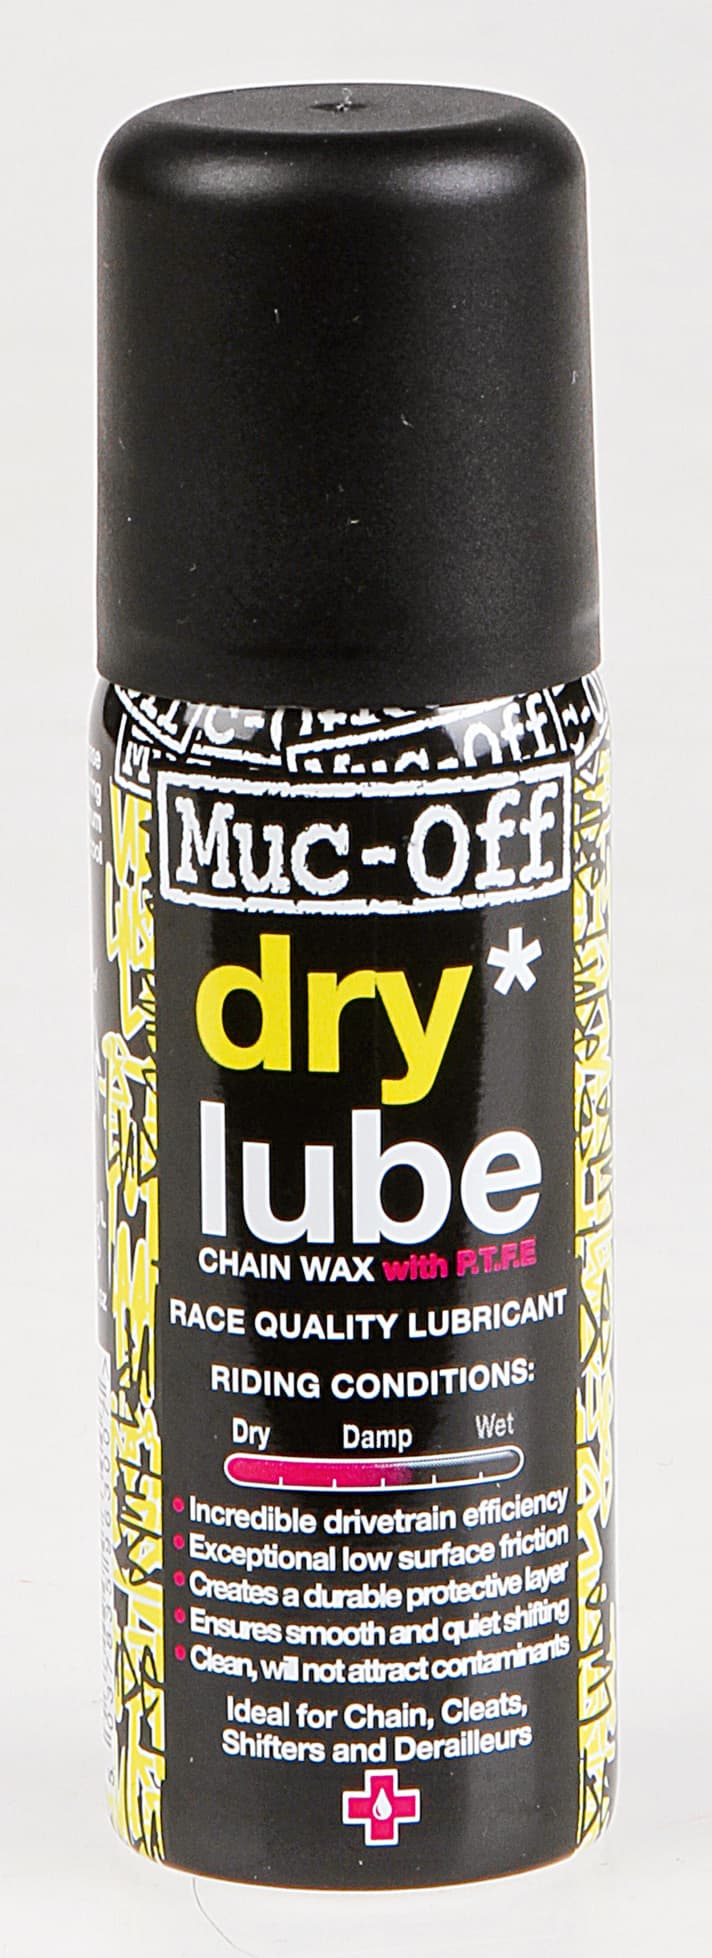   Muc-Off Dry Lube